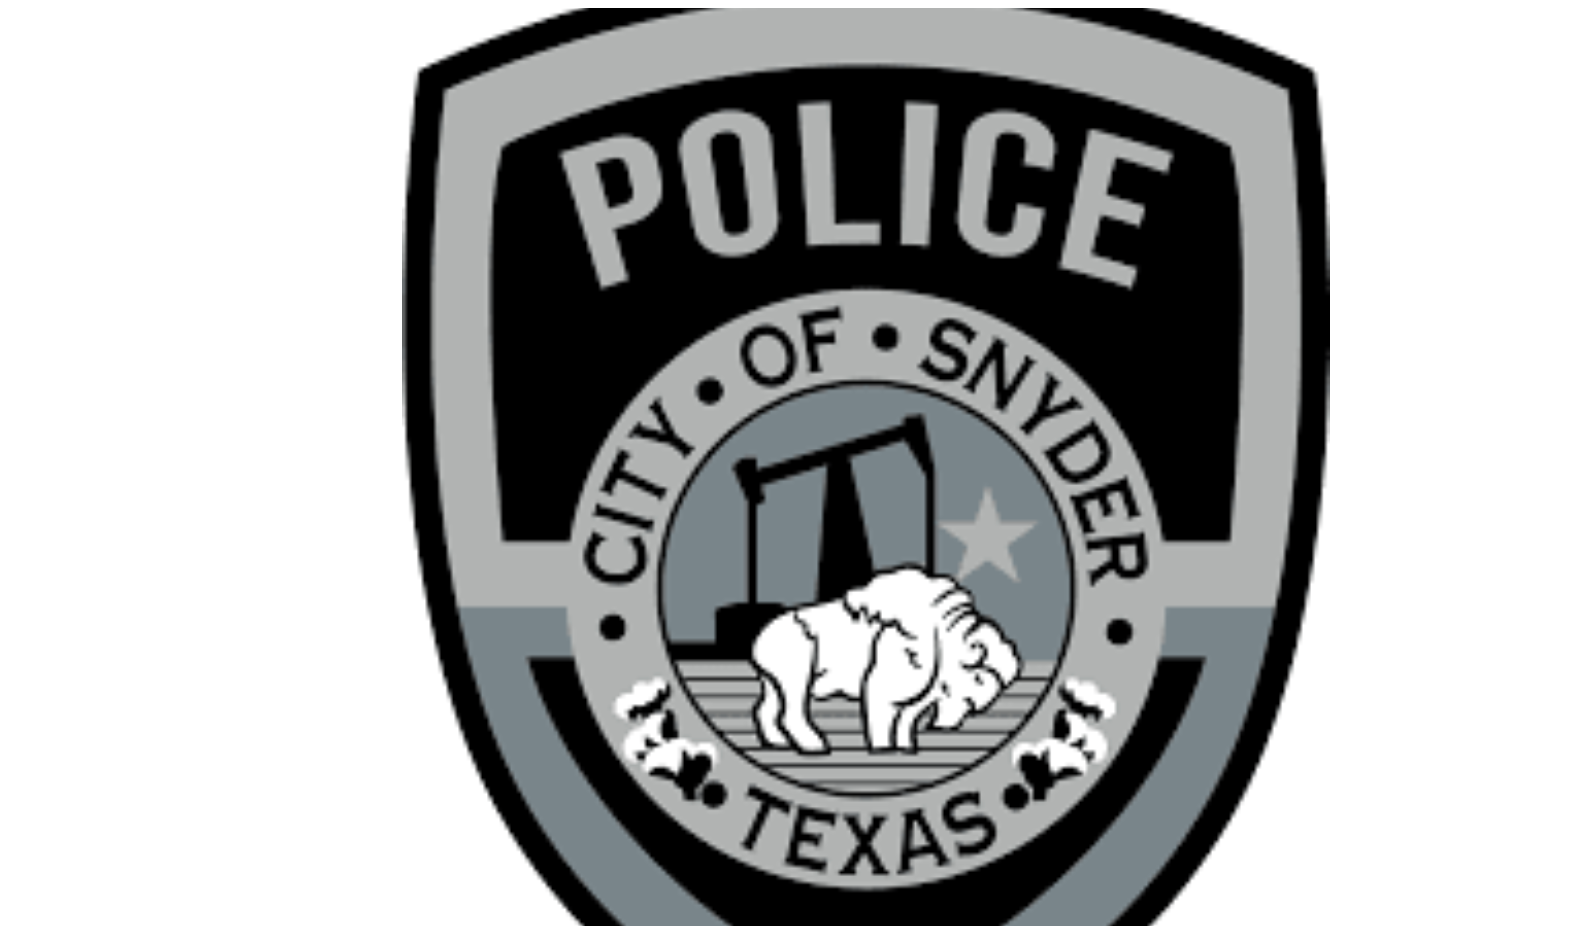 City of Snyder Police Badge